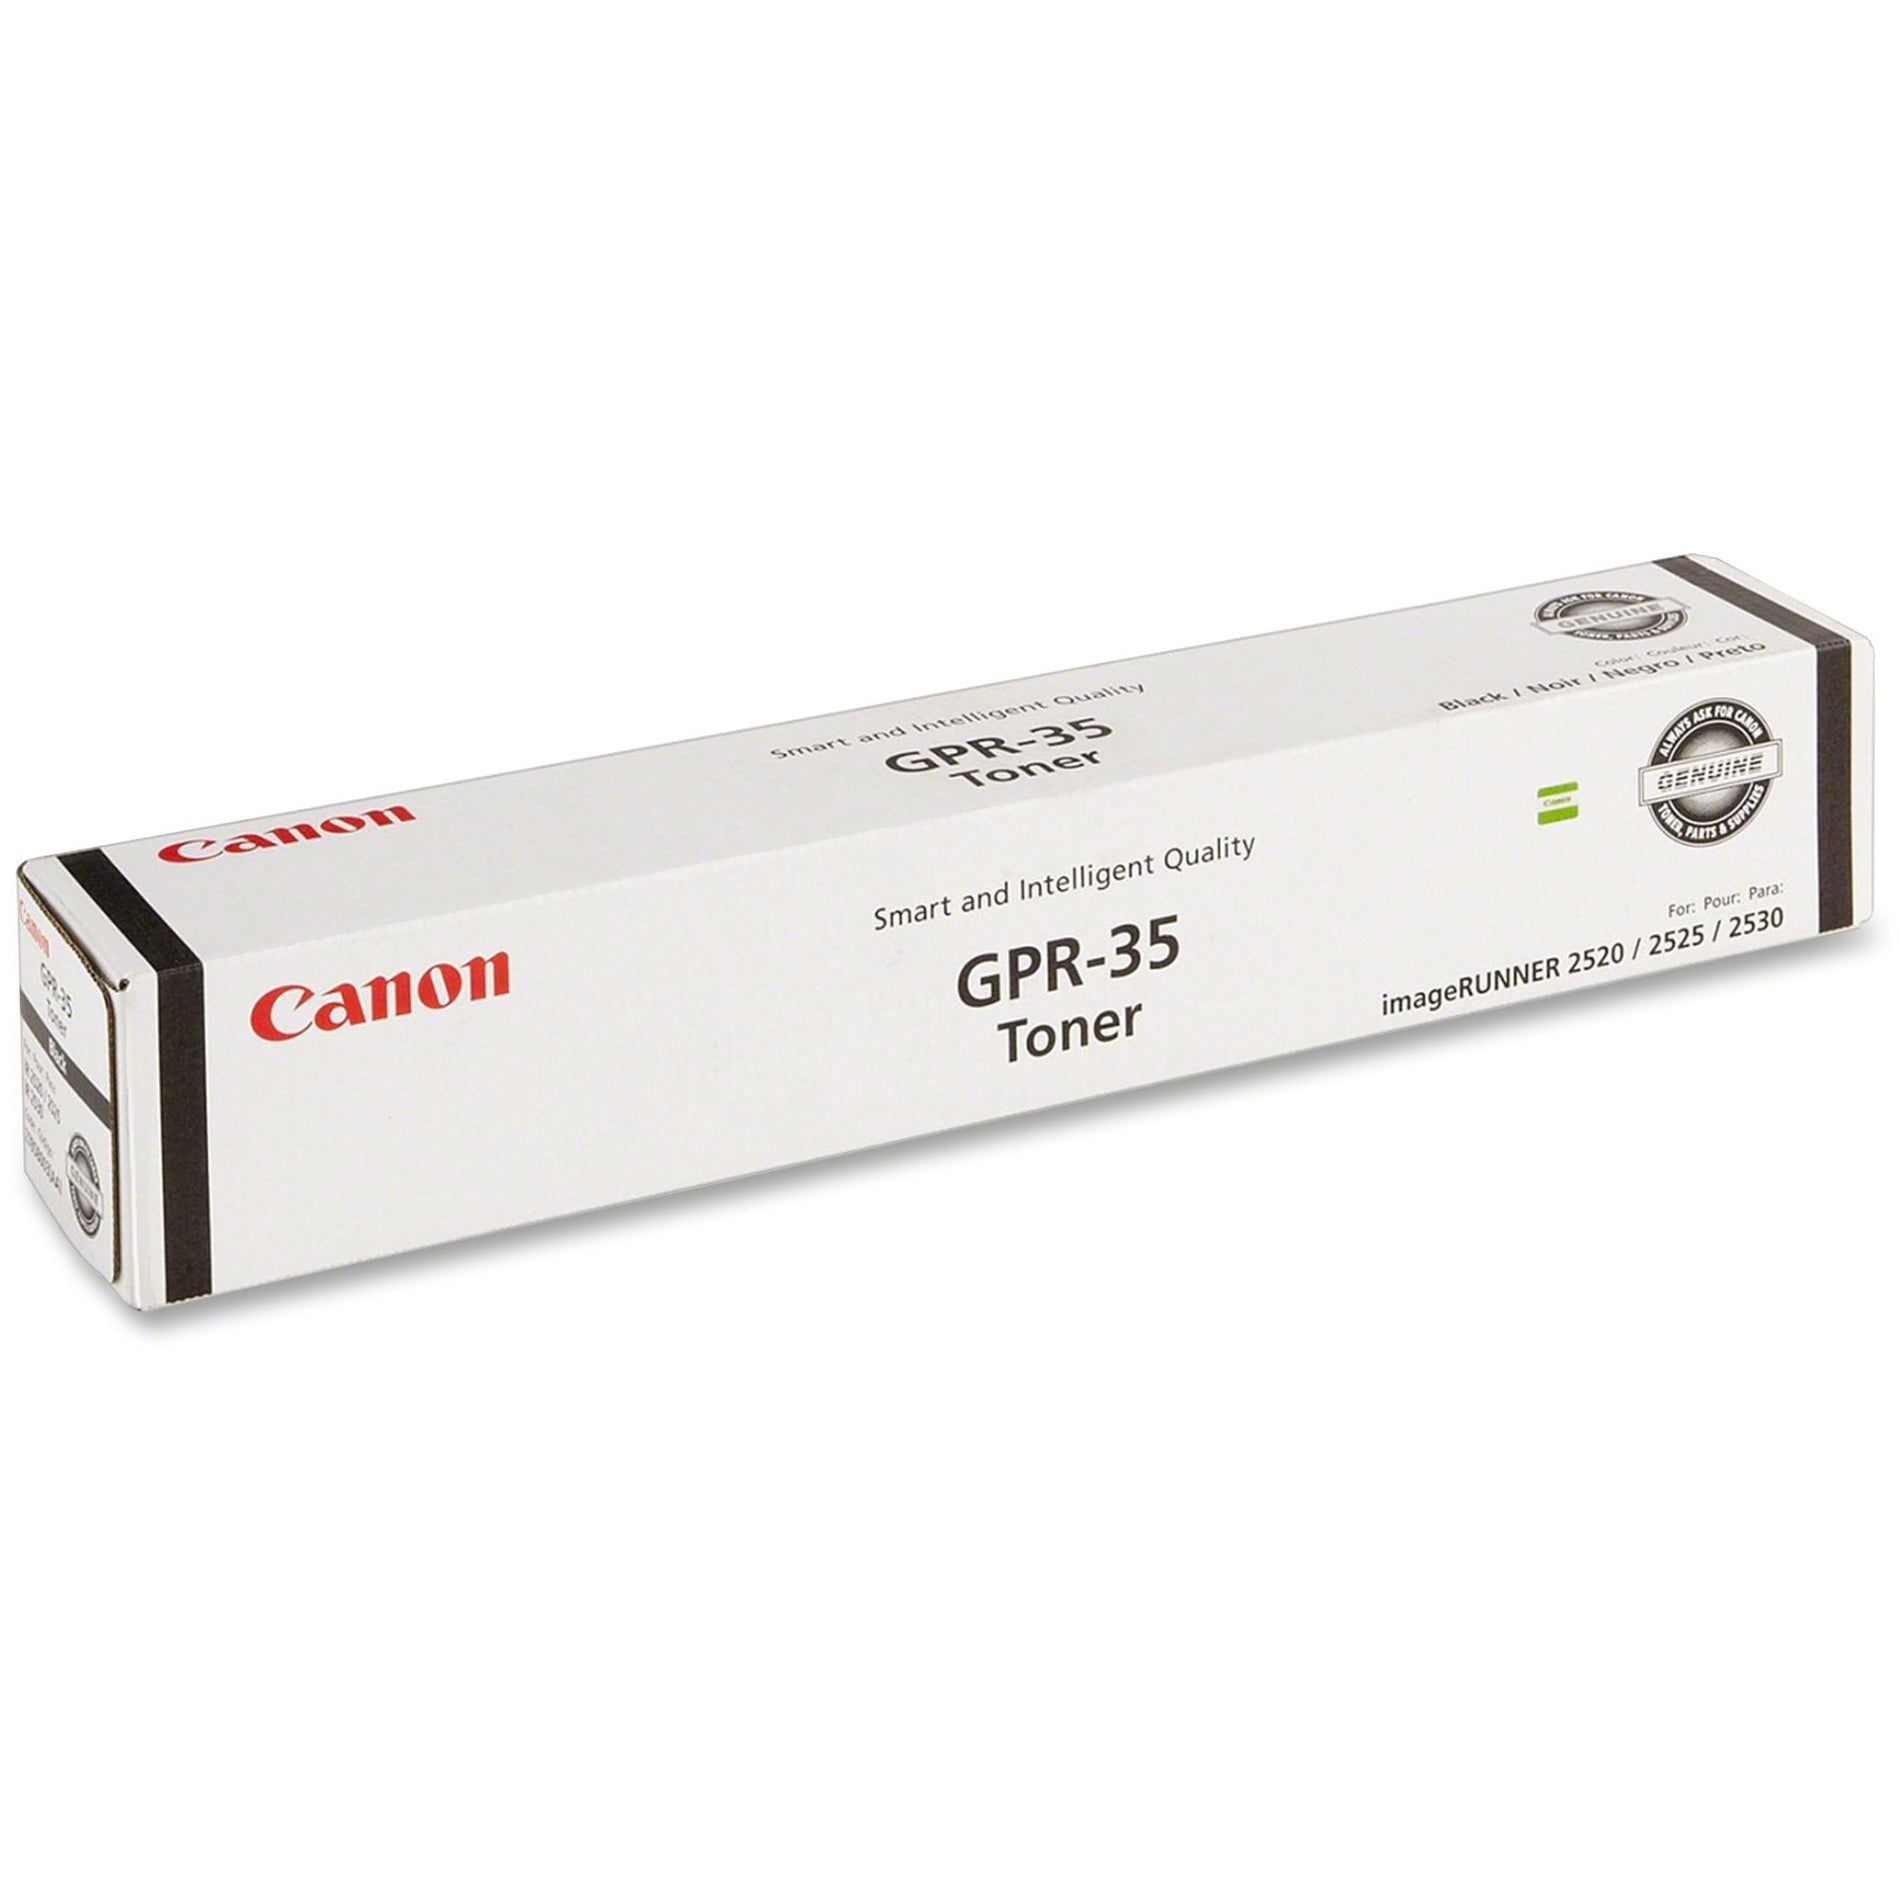 Canon 2785B003AA GPR-35 Toner Cartridge, 14600 PG Yield, Black